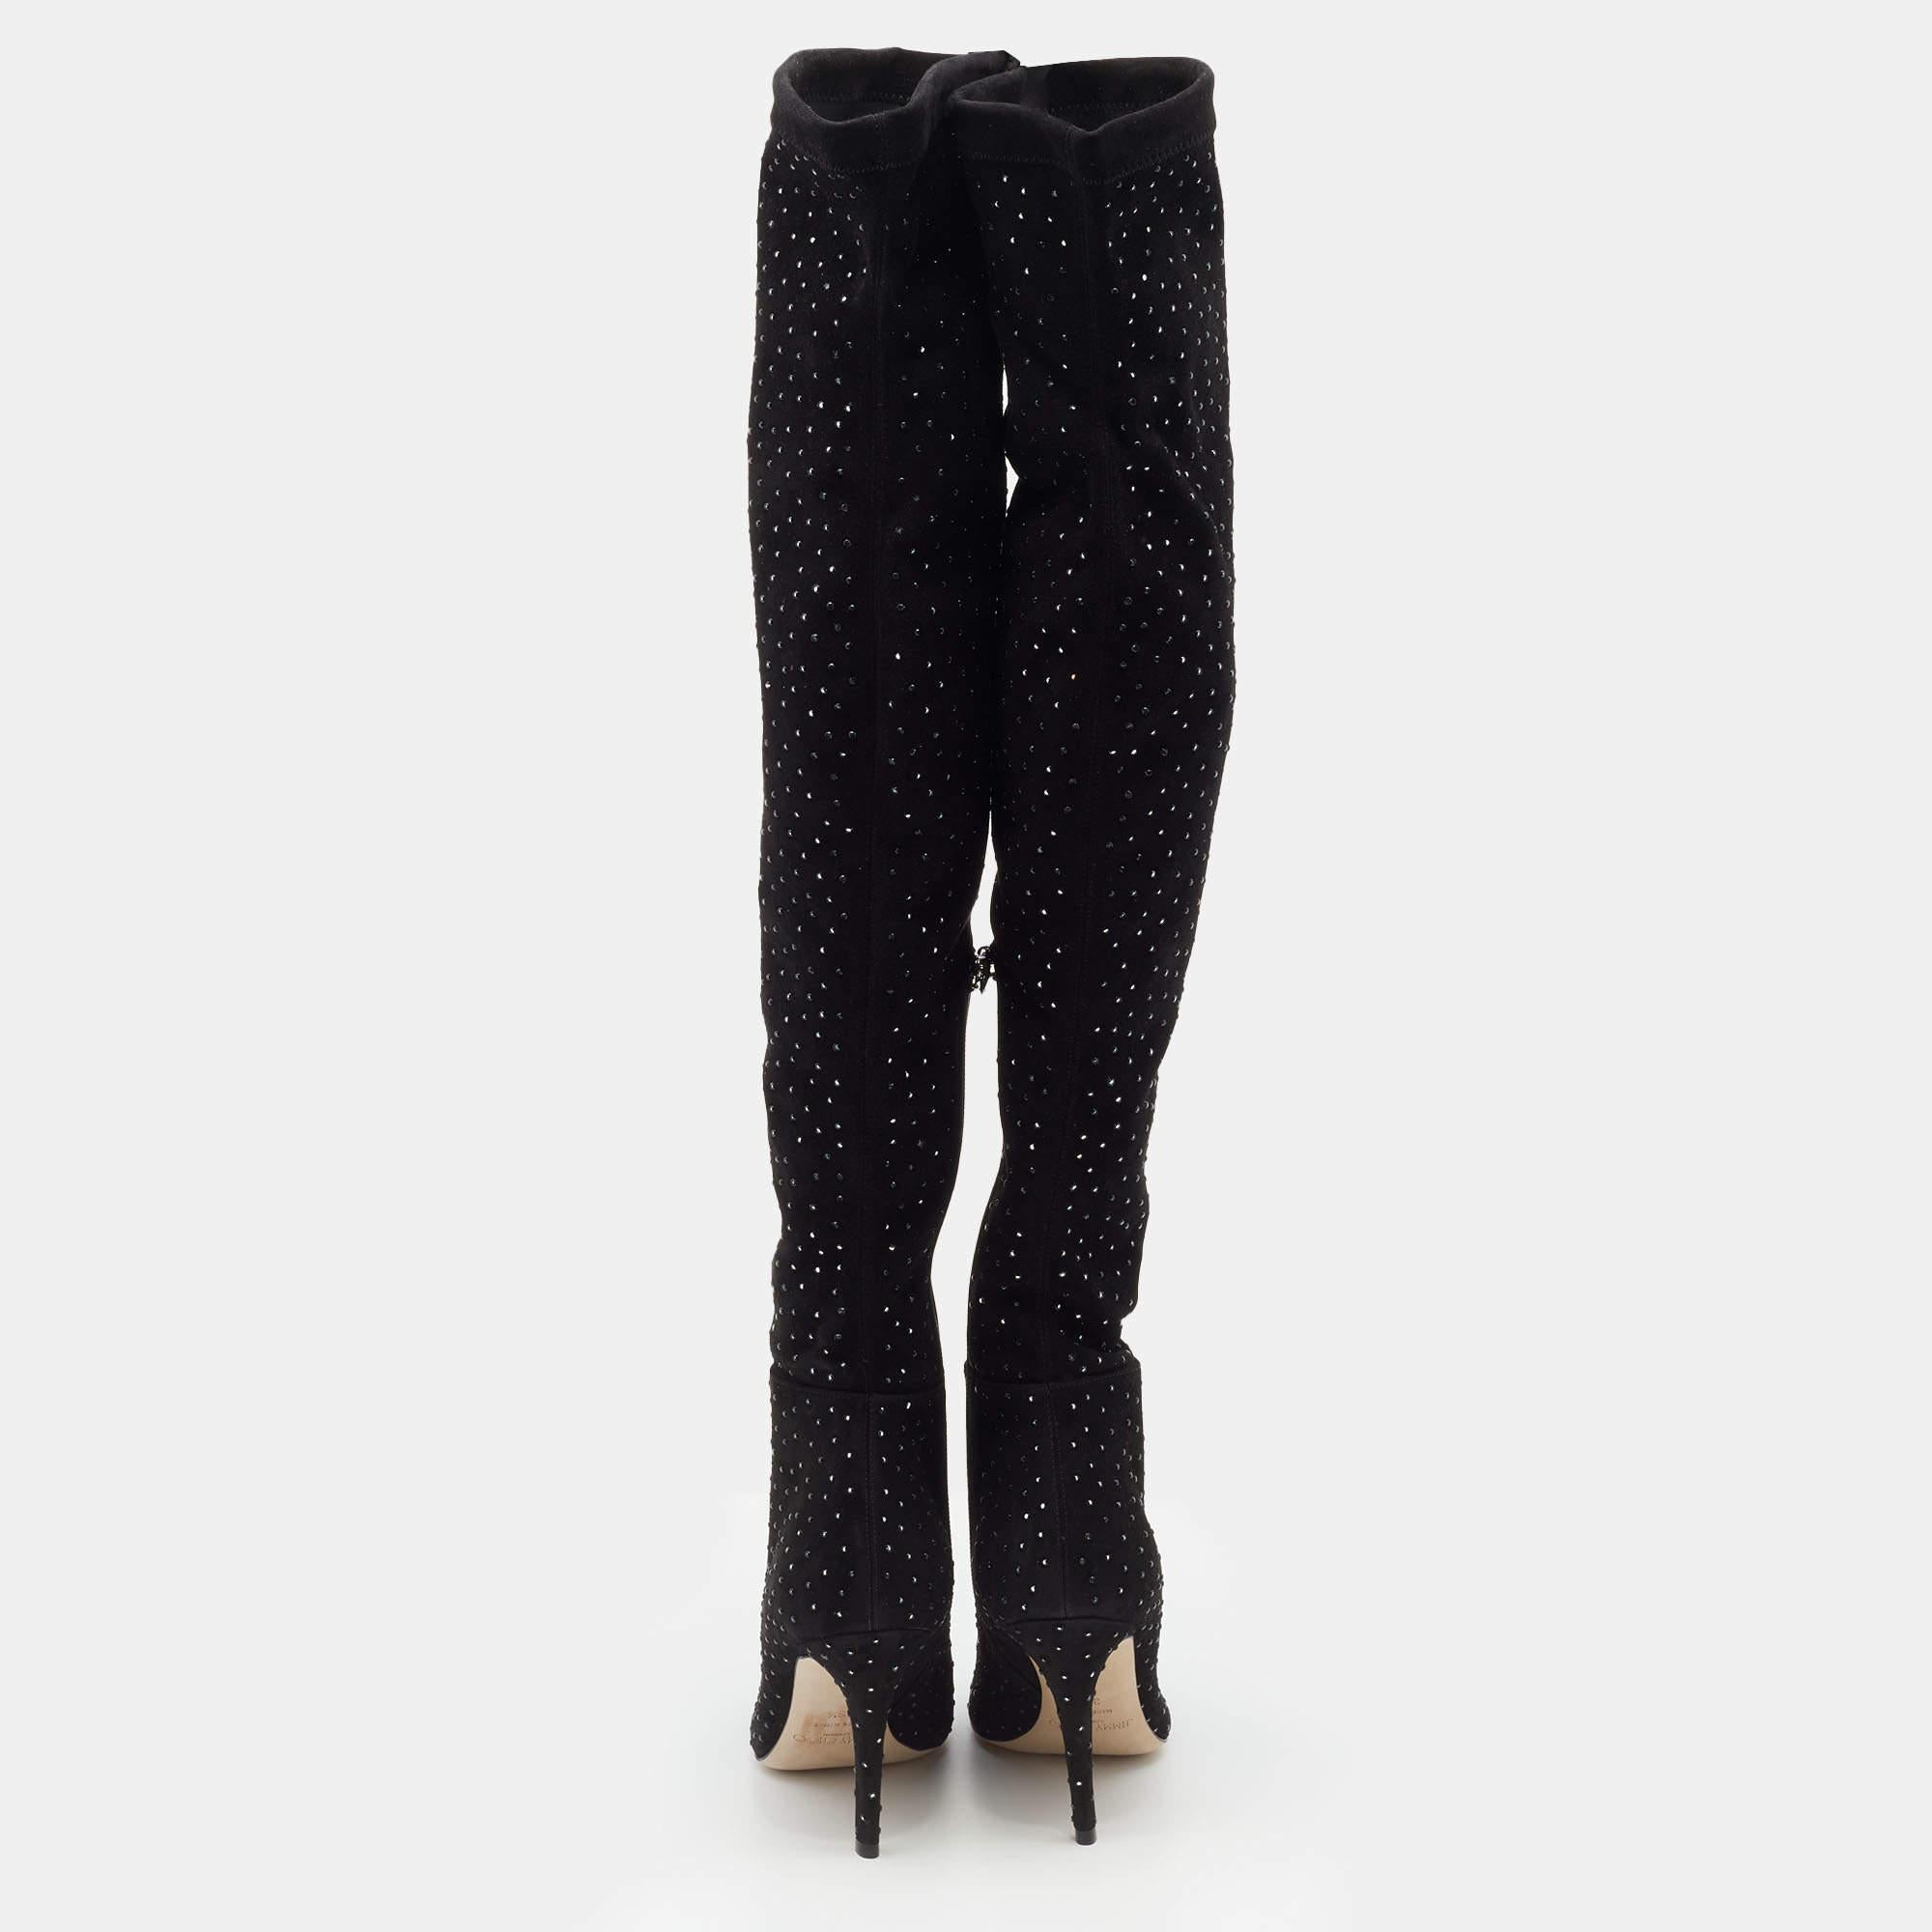 Jimmy Choo Black Stretch Fabric Toni Crystal Embellished Thigh High Boots Size 3 1